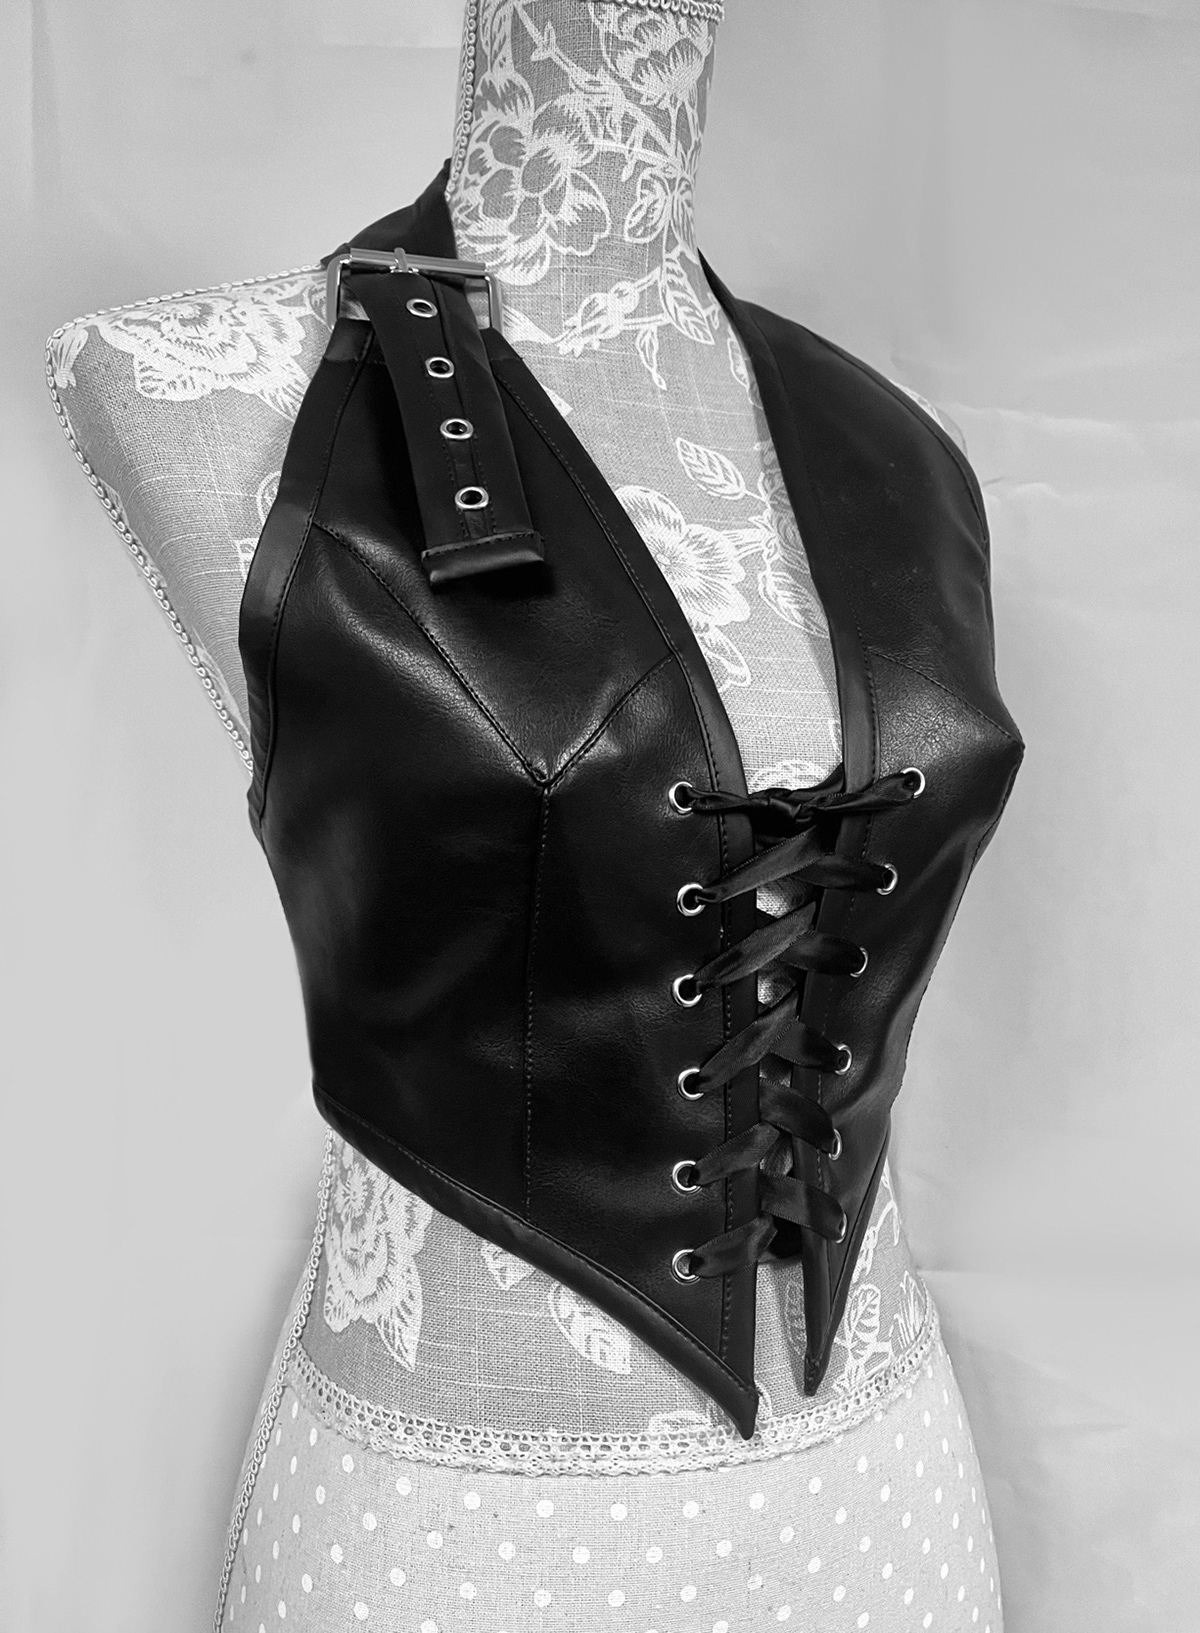 Fashion  fashion design leather laceup corset black Pattern cutting handmade Startup bespoke design belt sewing eyelets